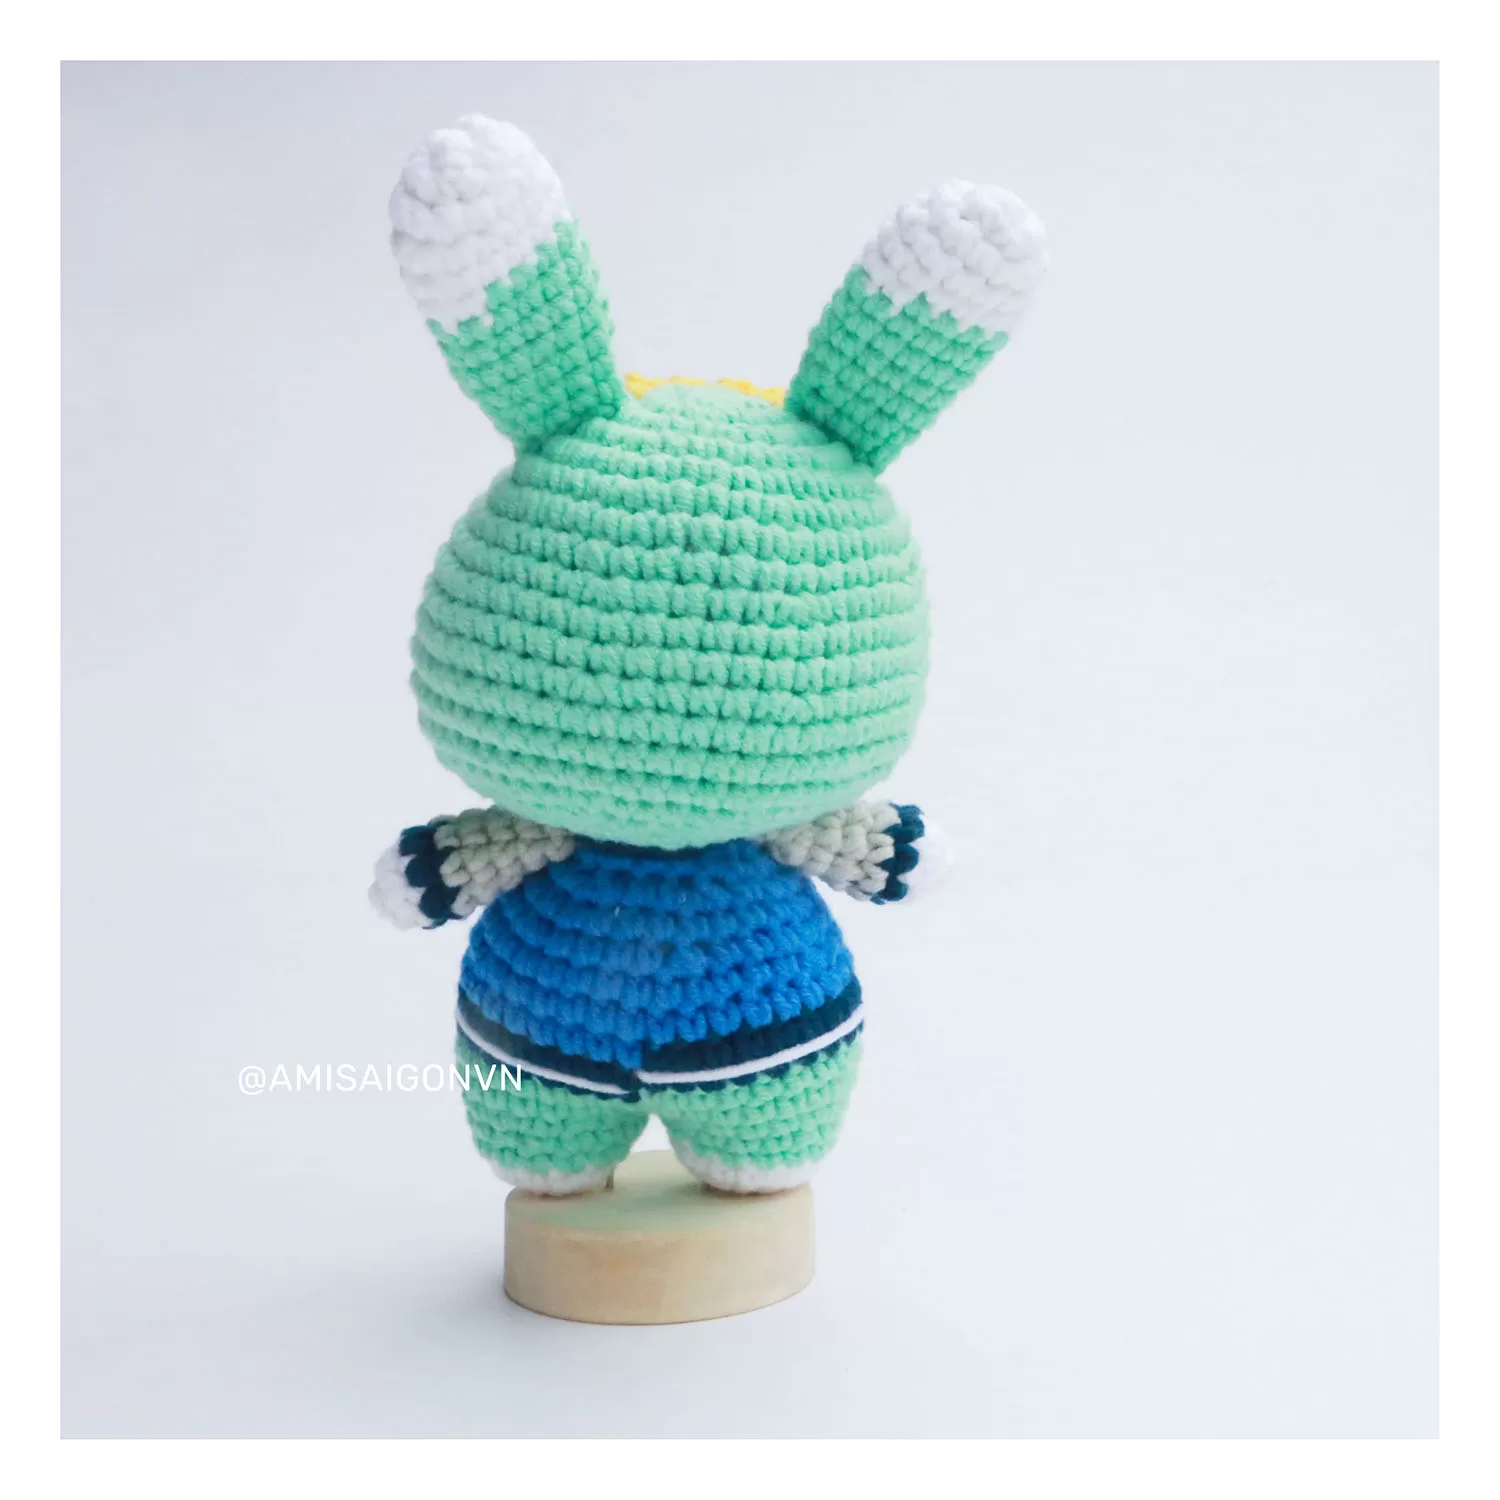 Sasha (Rabbit) Amigurumi | Crochet Pattern | Amigurumi Tutorial PDF in English | AmiSaigon